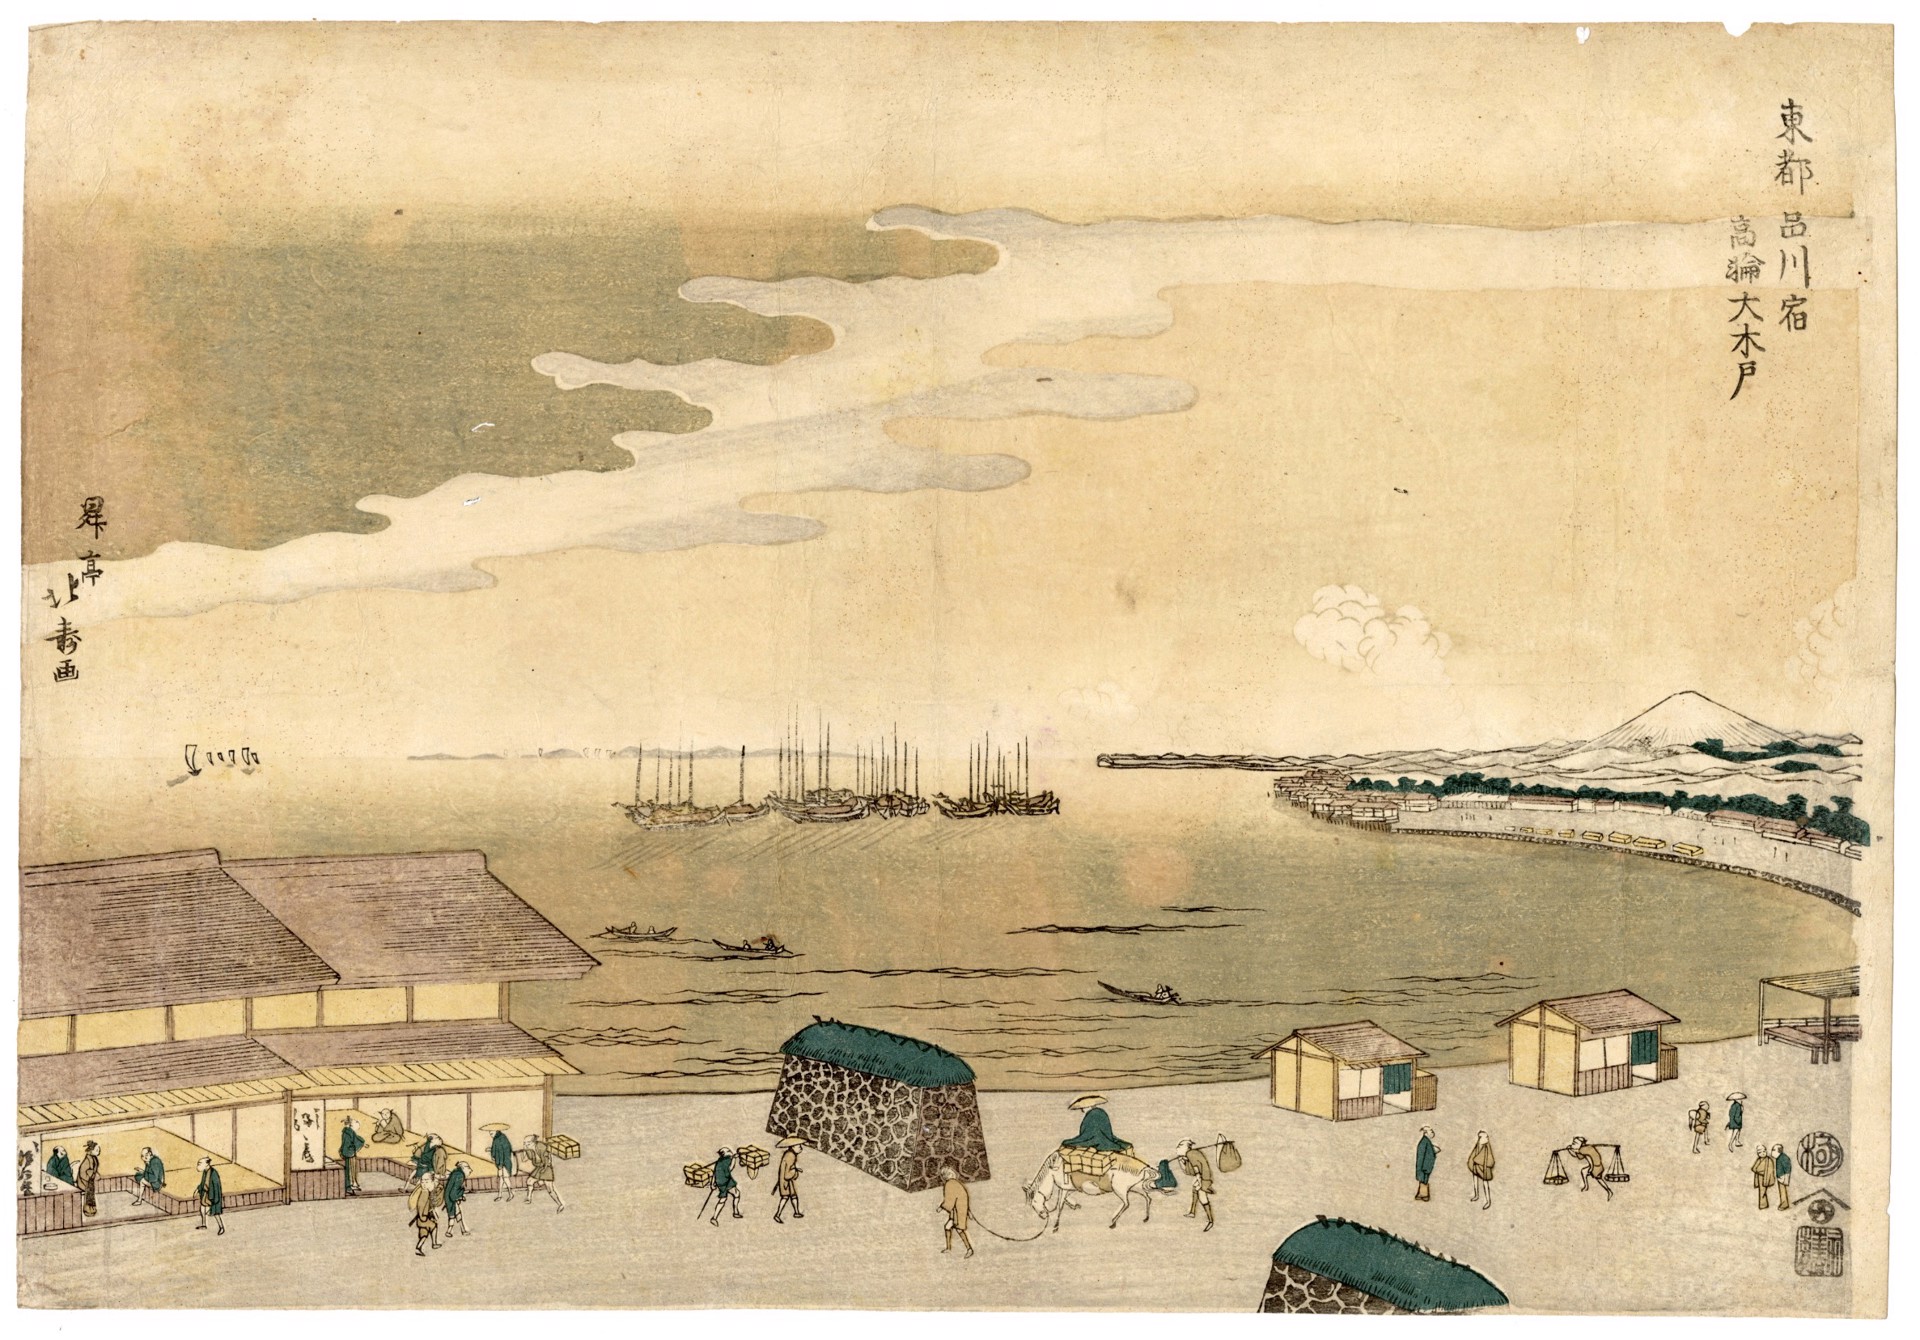 Takanawa Okido in Shinagawa by Hokuju